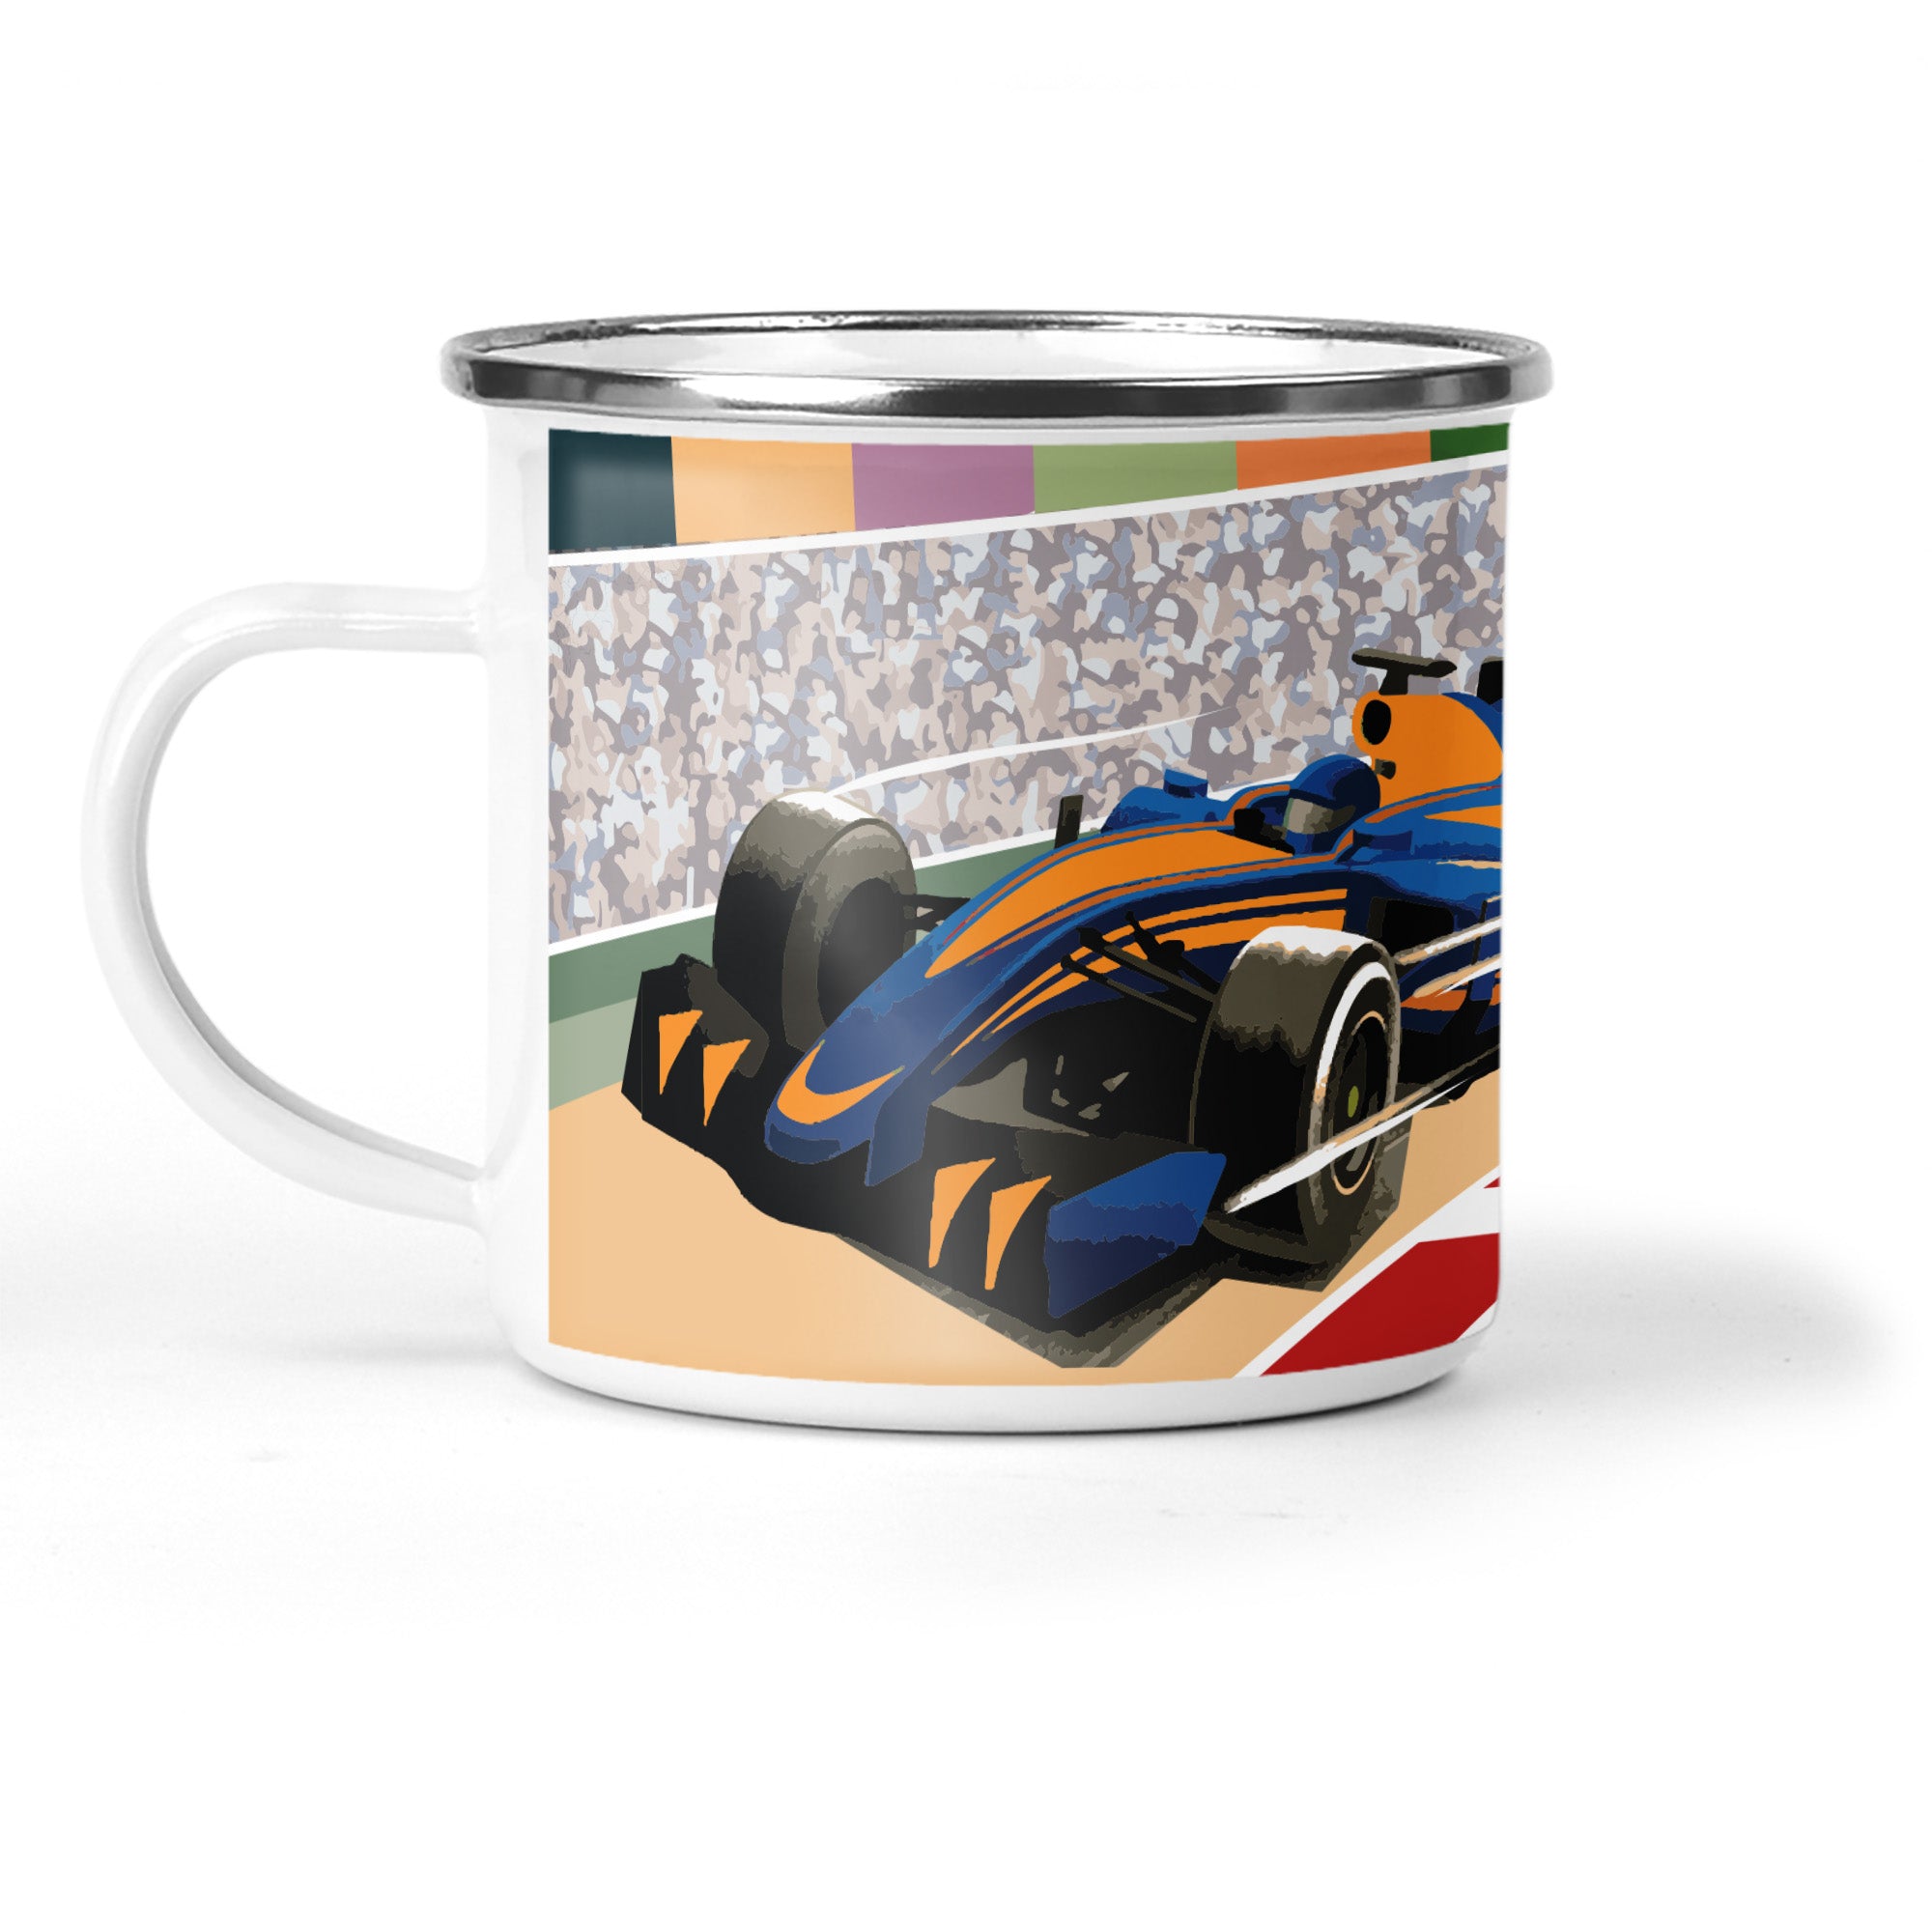 Motor Sport "Racing Car" Enamel Mug